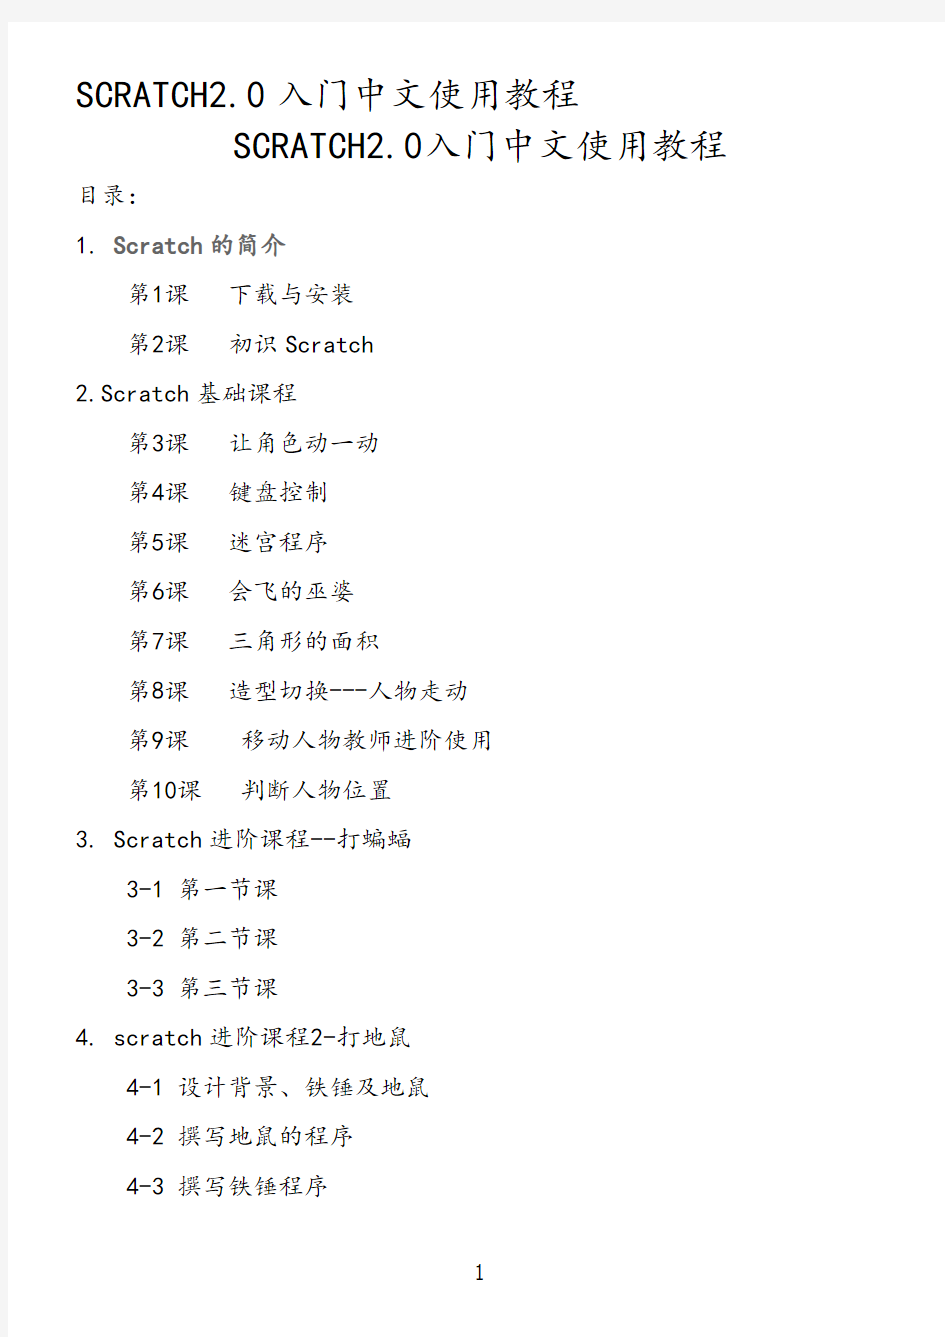 Scratch2.0入门中文使用教程